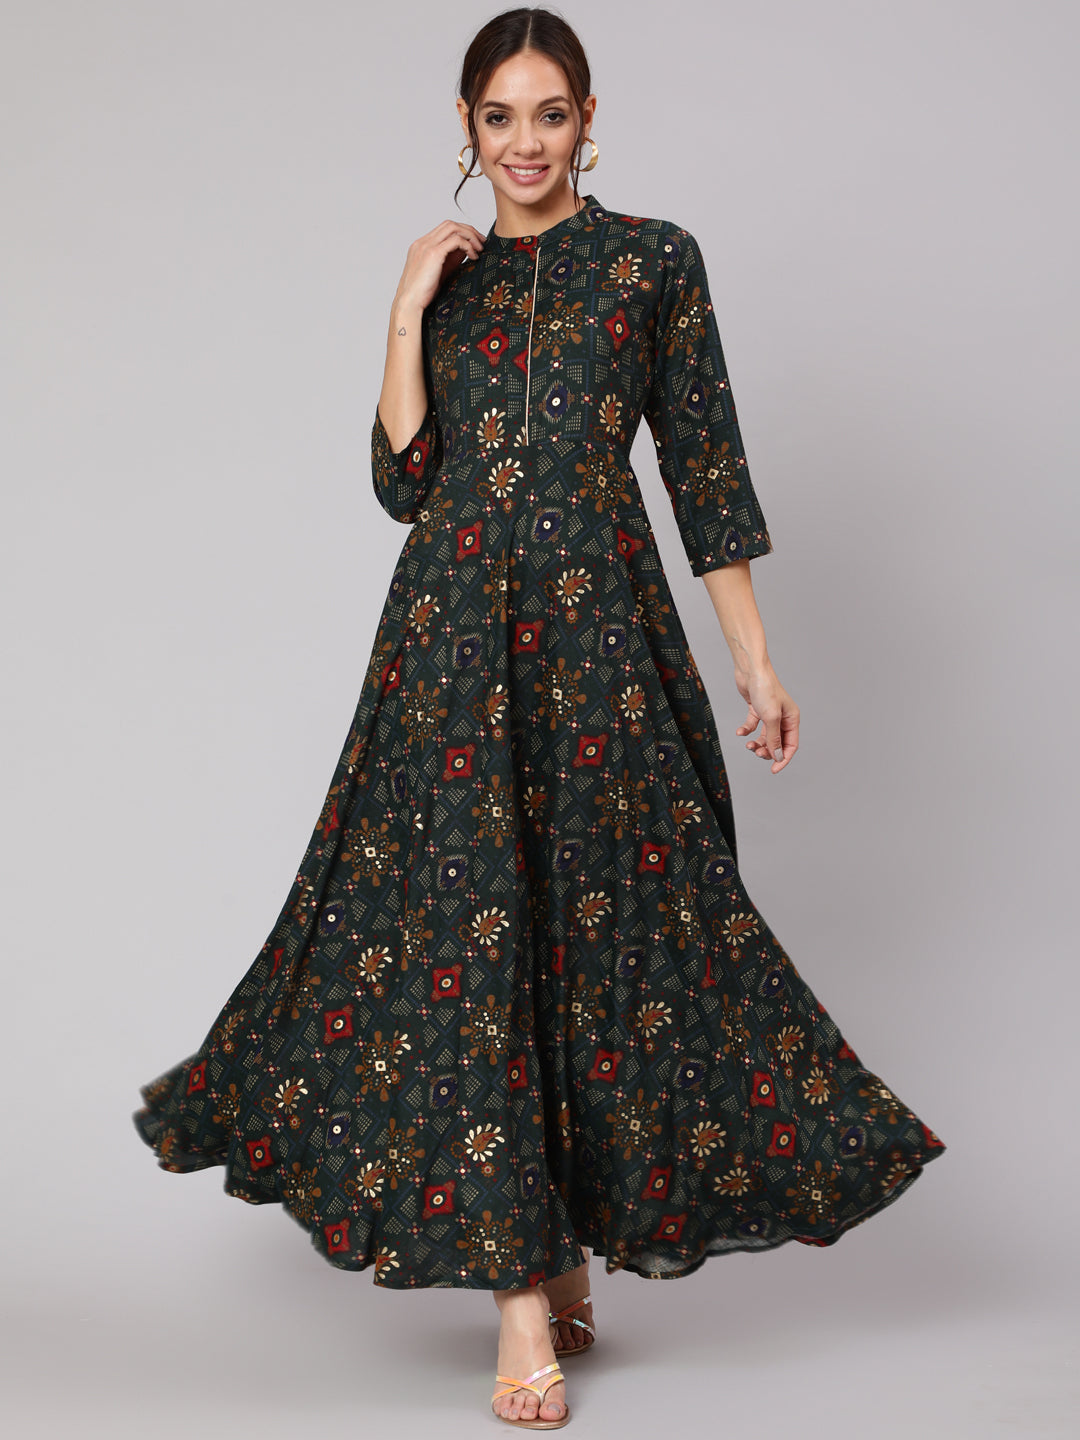 Women Burgundy Printed Dress With Three Quarter Sleeves at Rs 907.00 |  Floral Dress, Flower Dress, फ्लोरल प्रिंटेड ड्रेस, फ्लोरल मुद्रित ड्रेस -  NOZ2TOZ, New Delhi | ID: 2850511487055